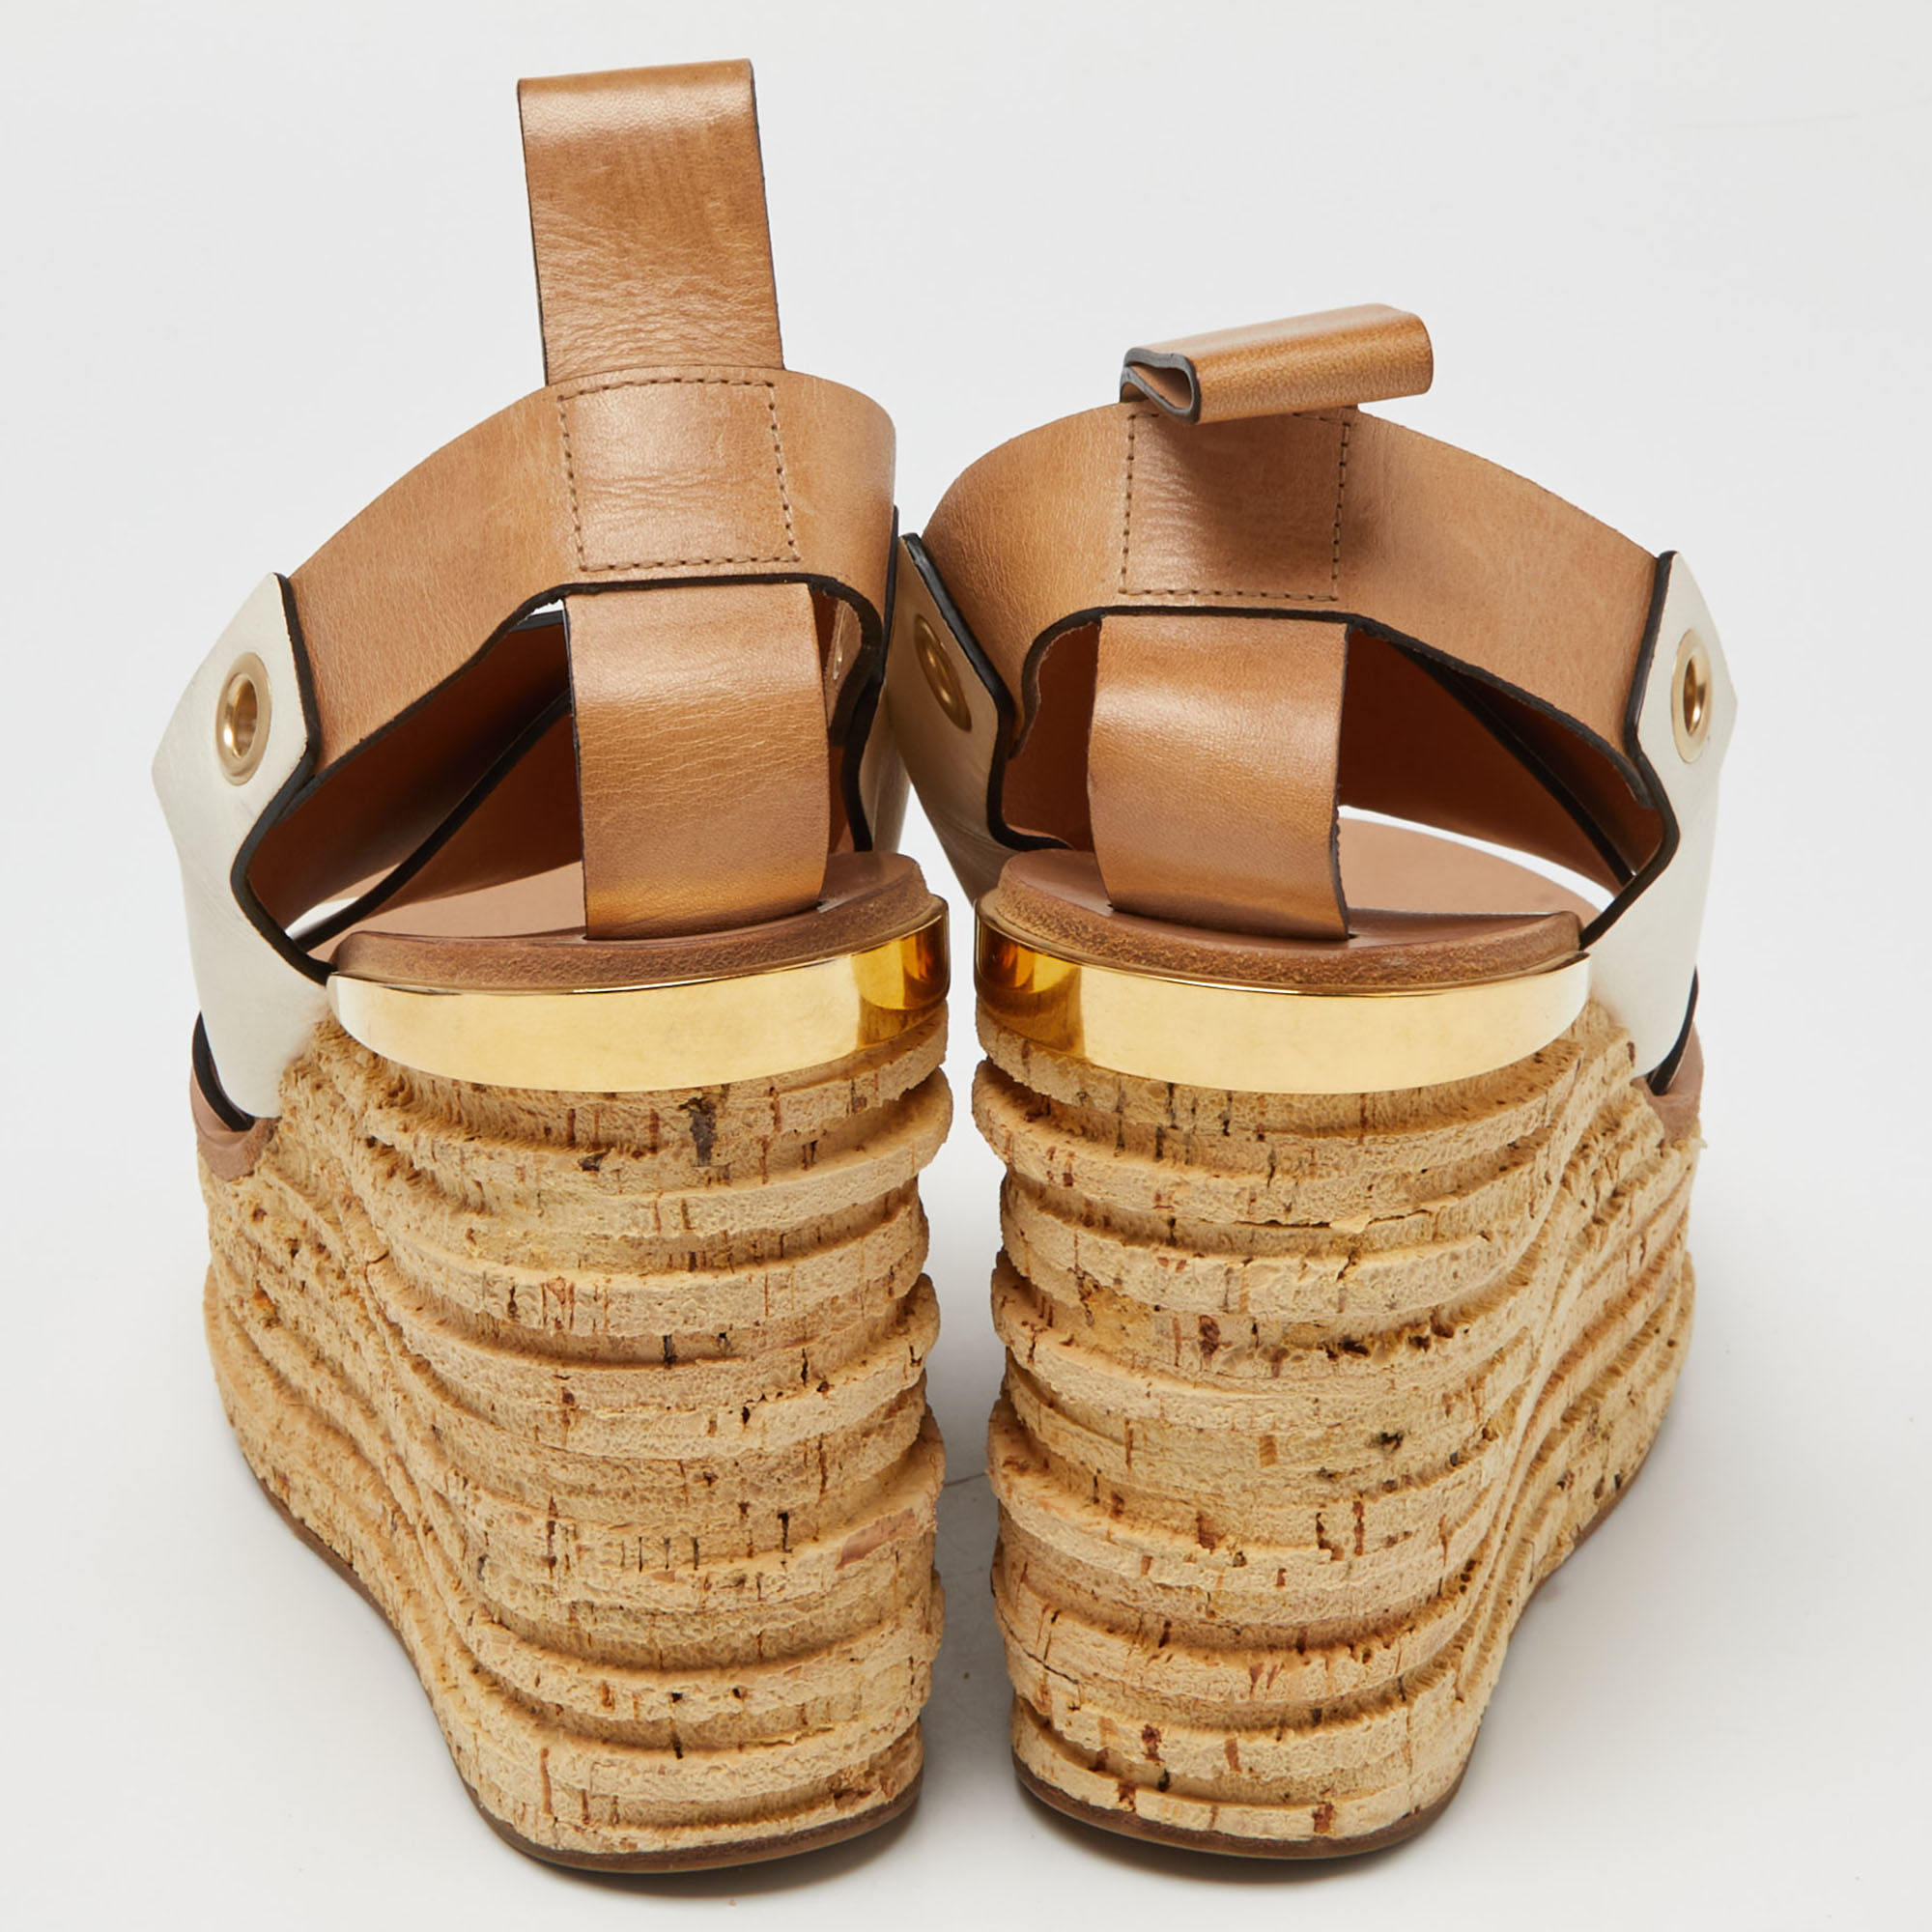 Chloe White/Tan Leather Cross Strap Wedge Platform Slingback Sandals Size 38